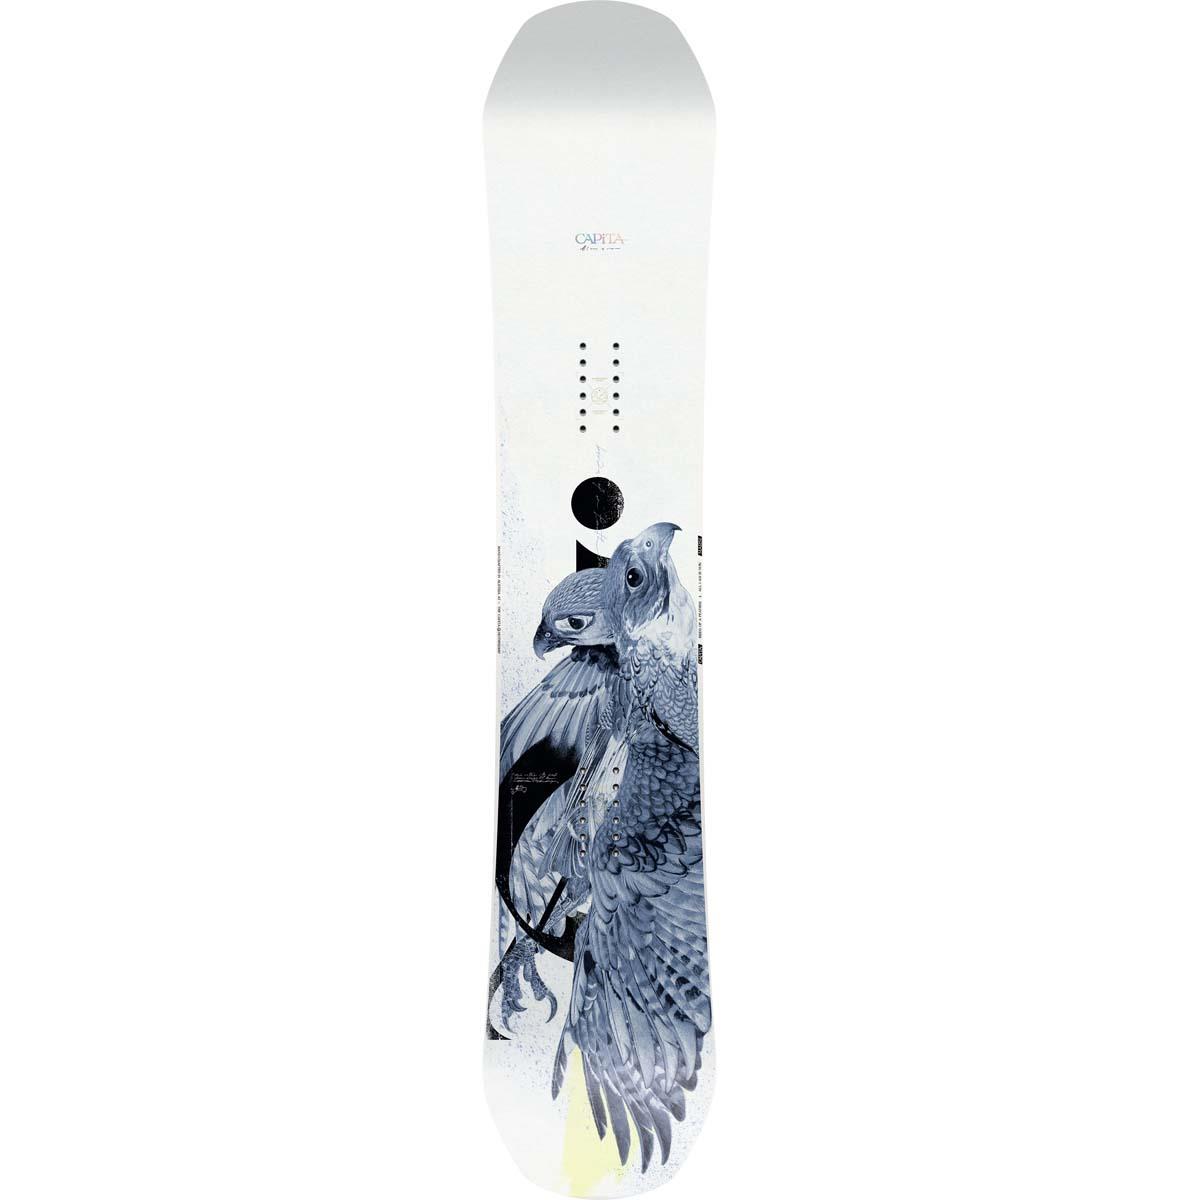 Capita Birds of a Feather Snowboard